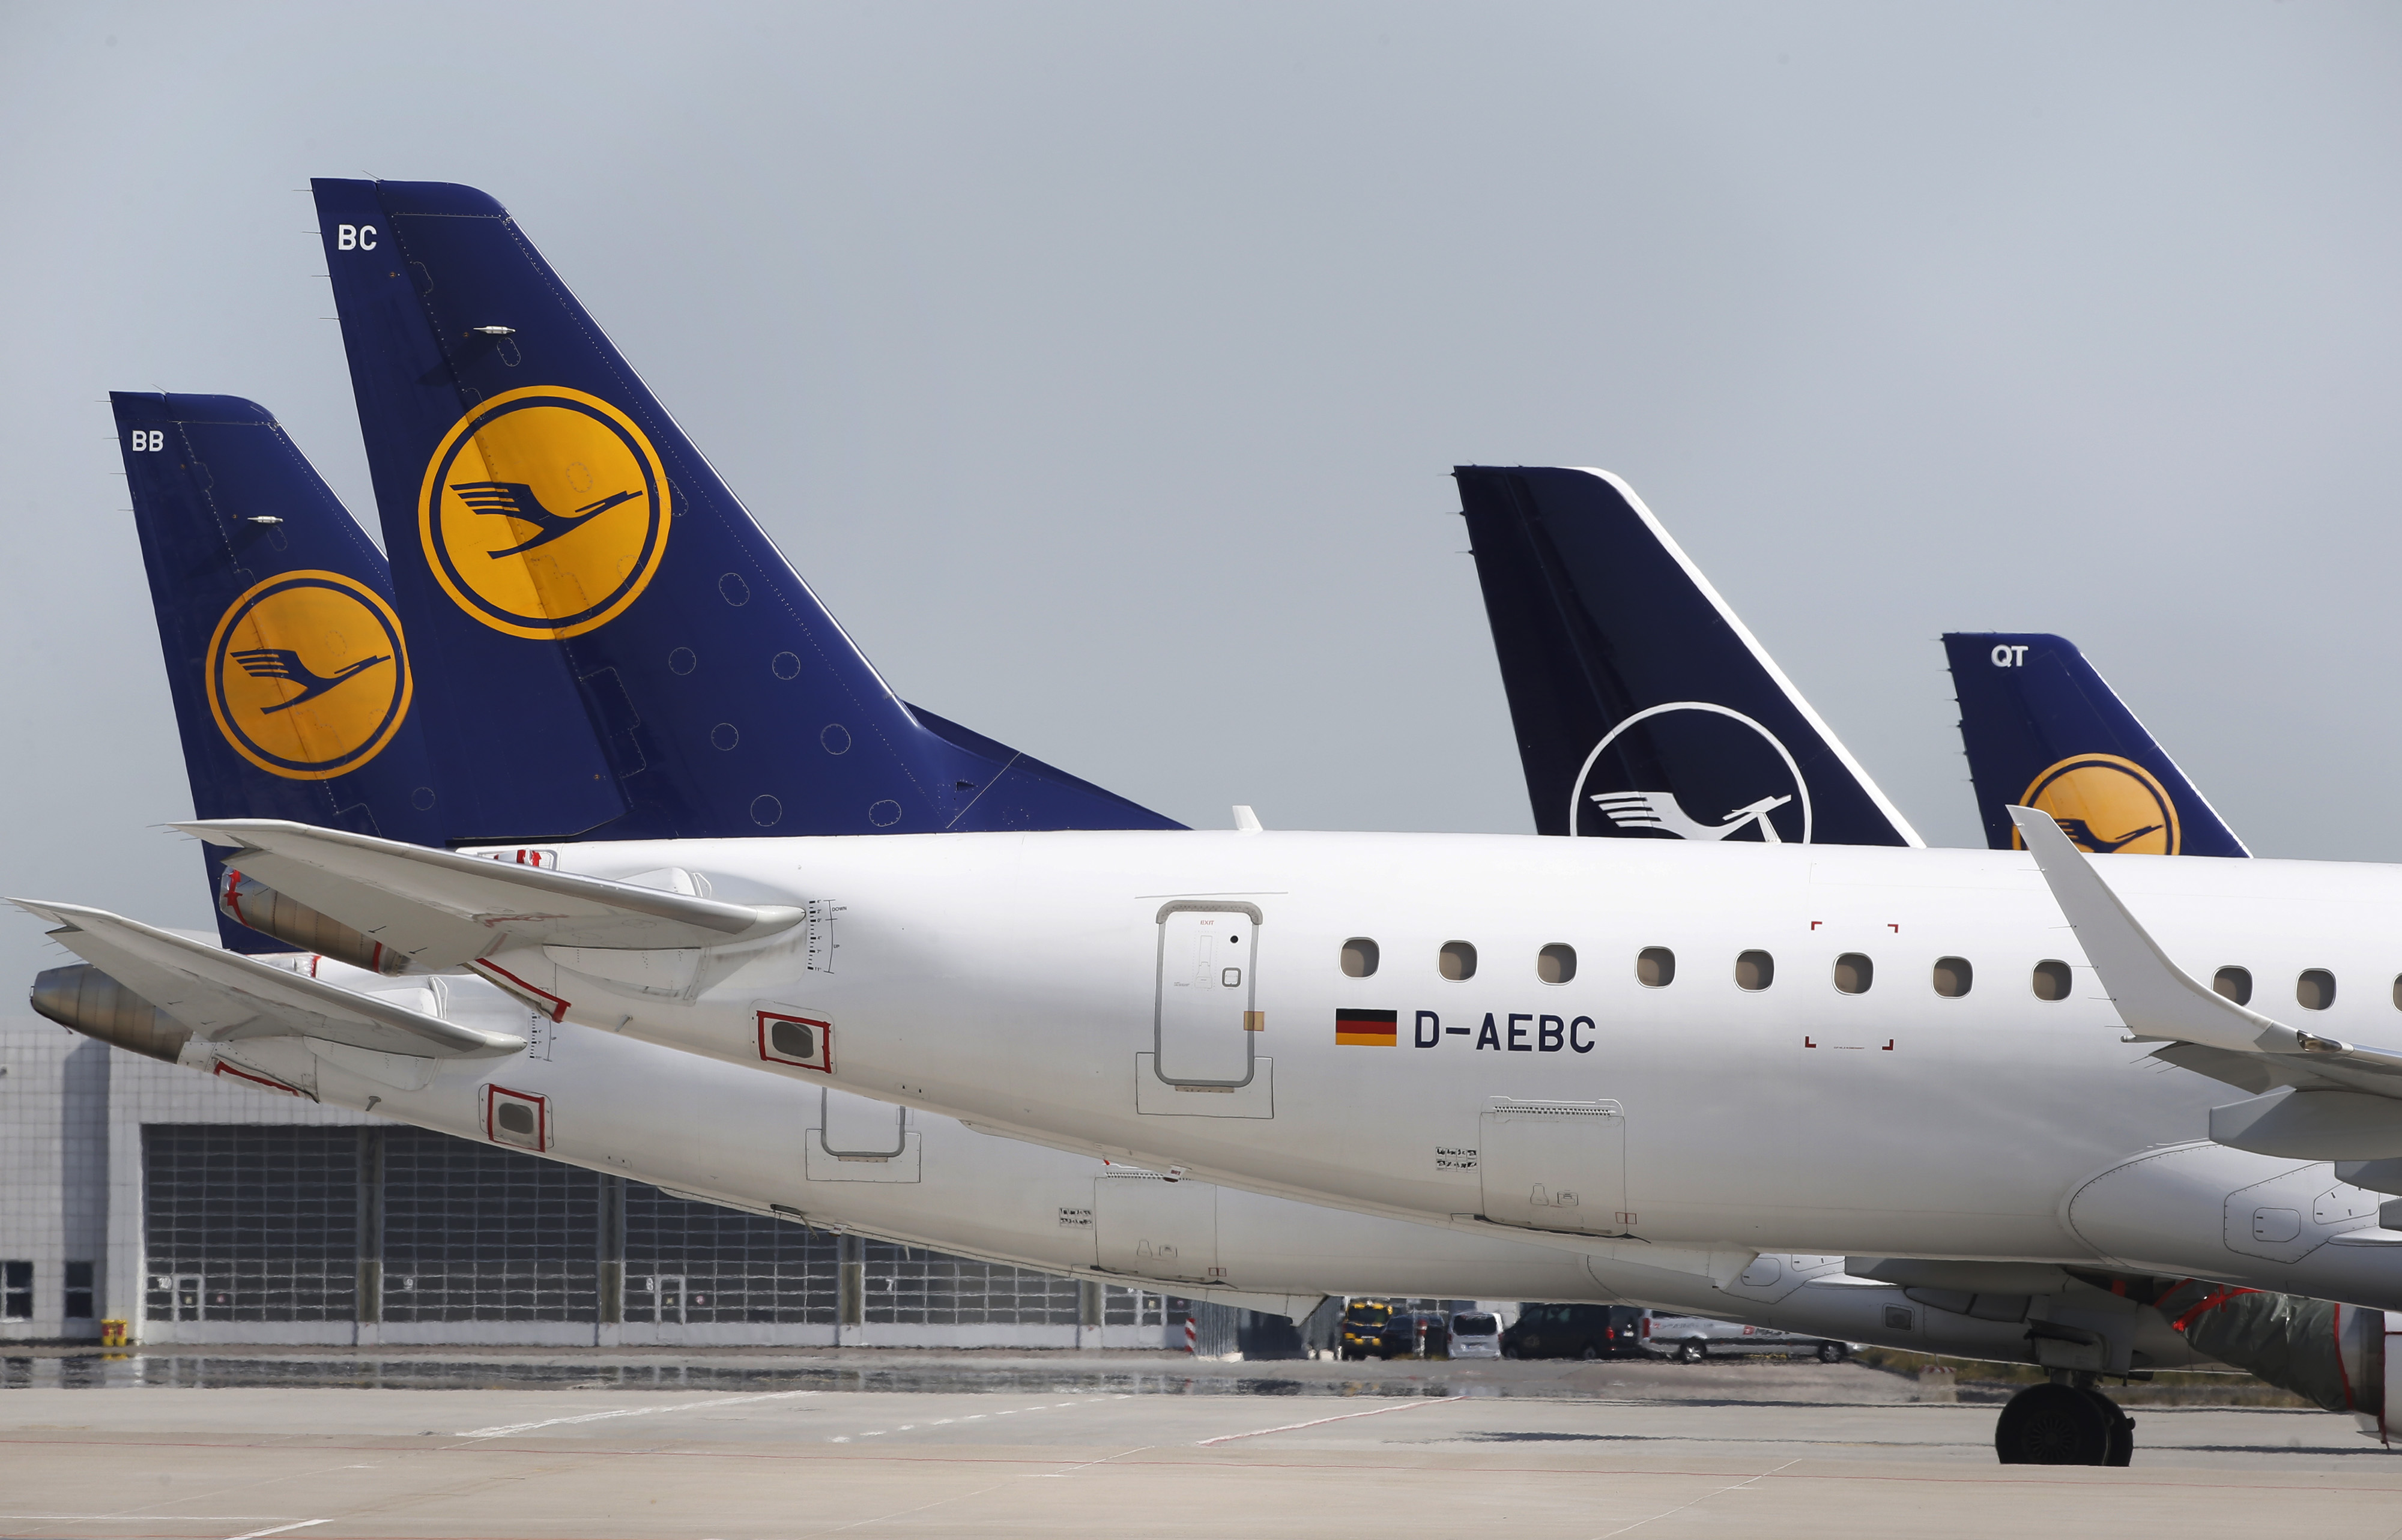 The Deutsche Lufthansa aircraft on the tarmac at Munich airport.